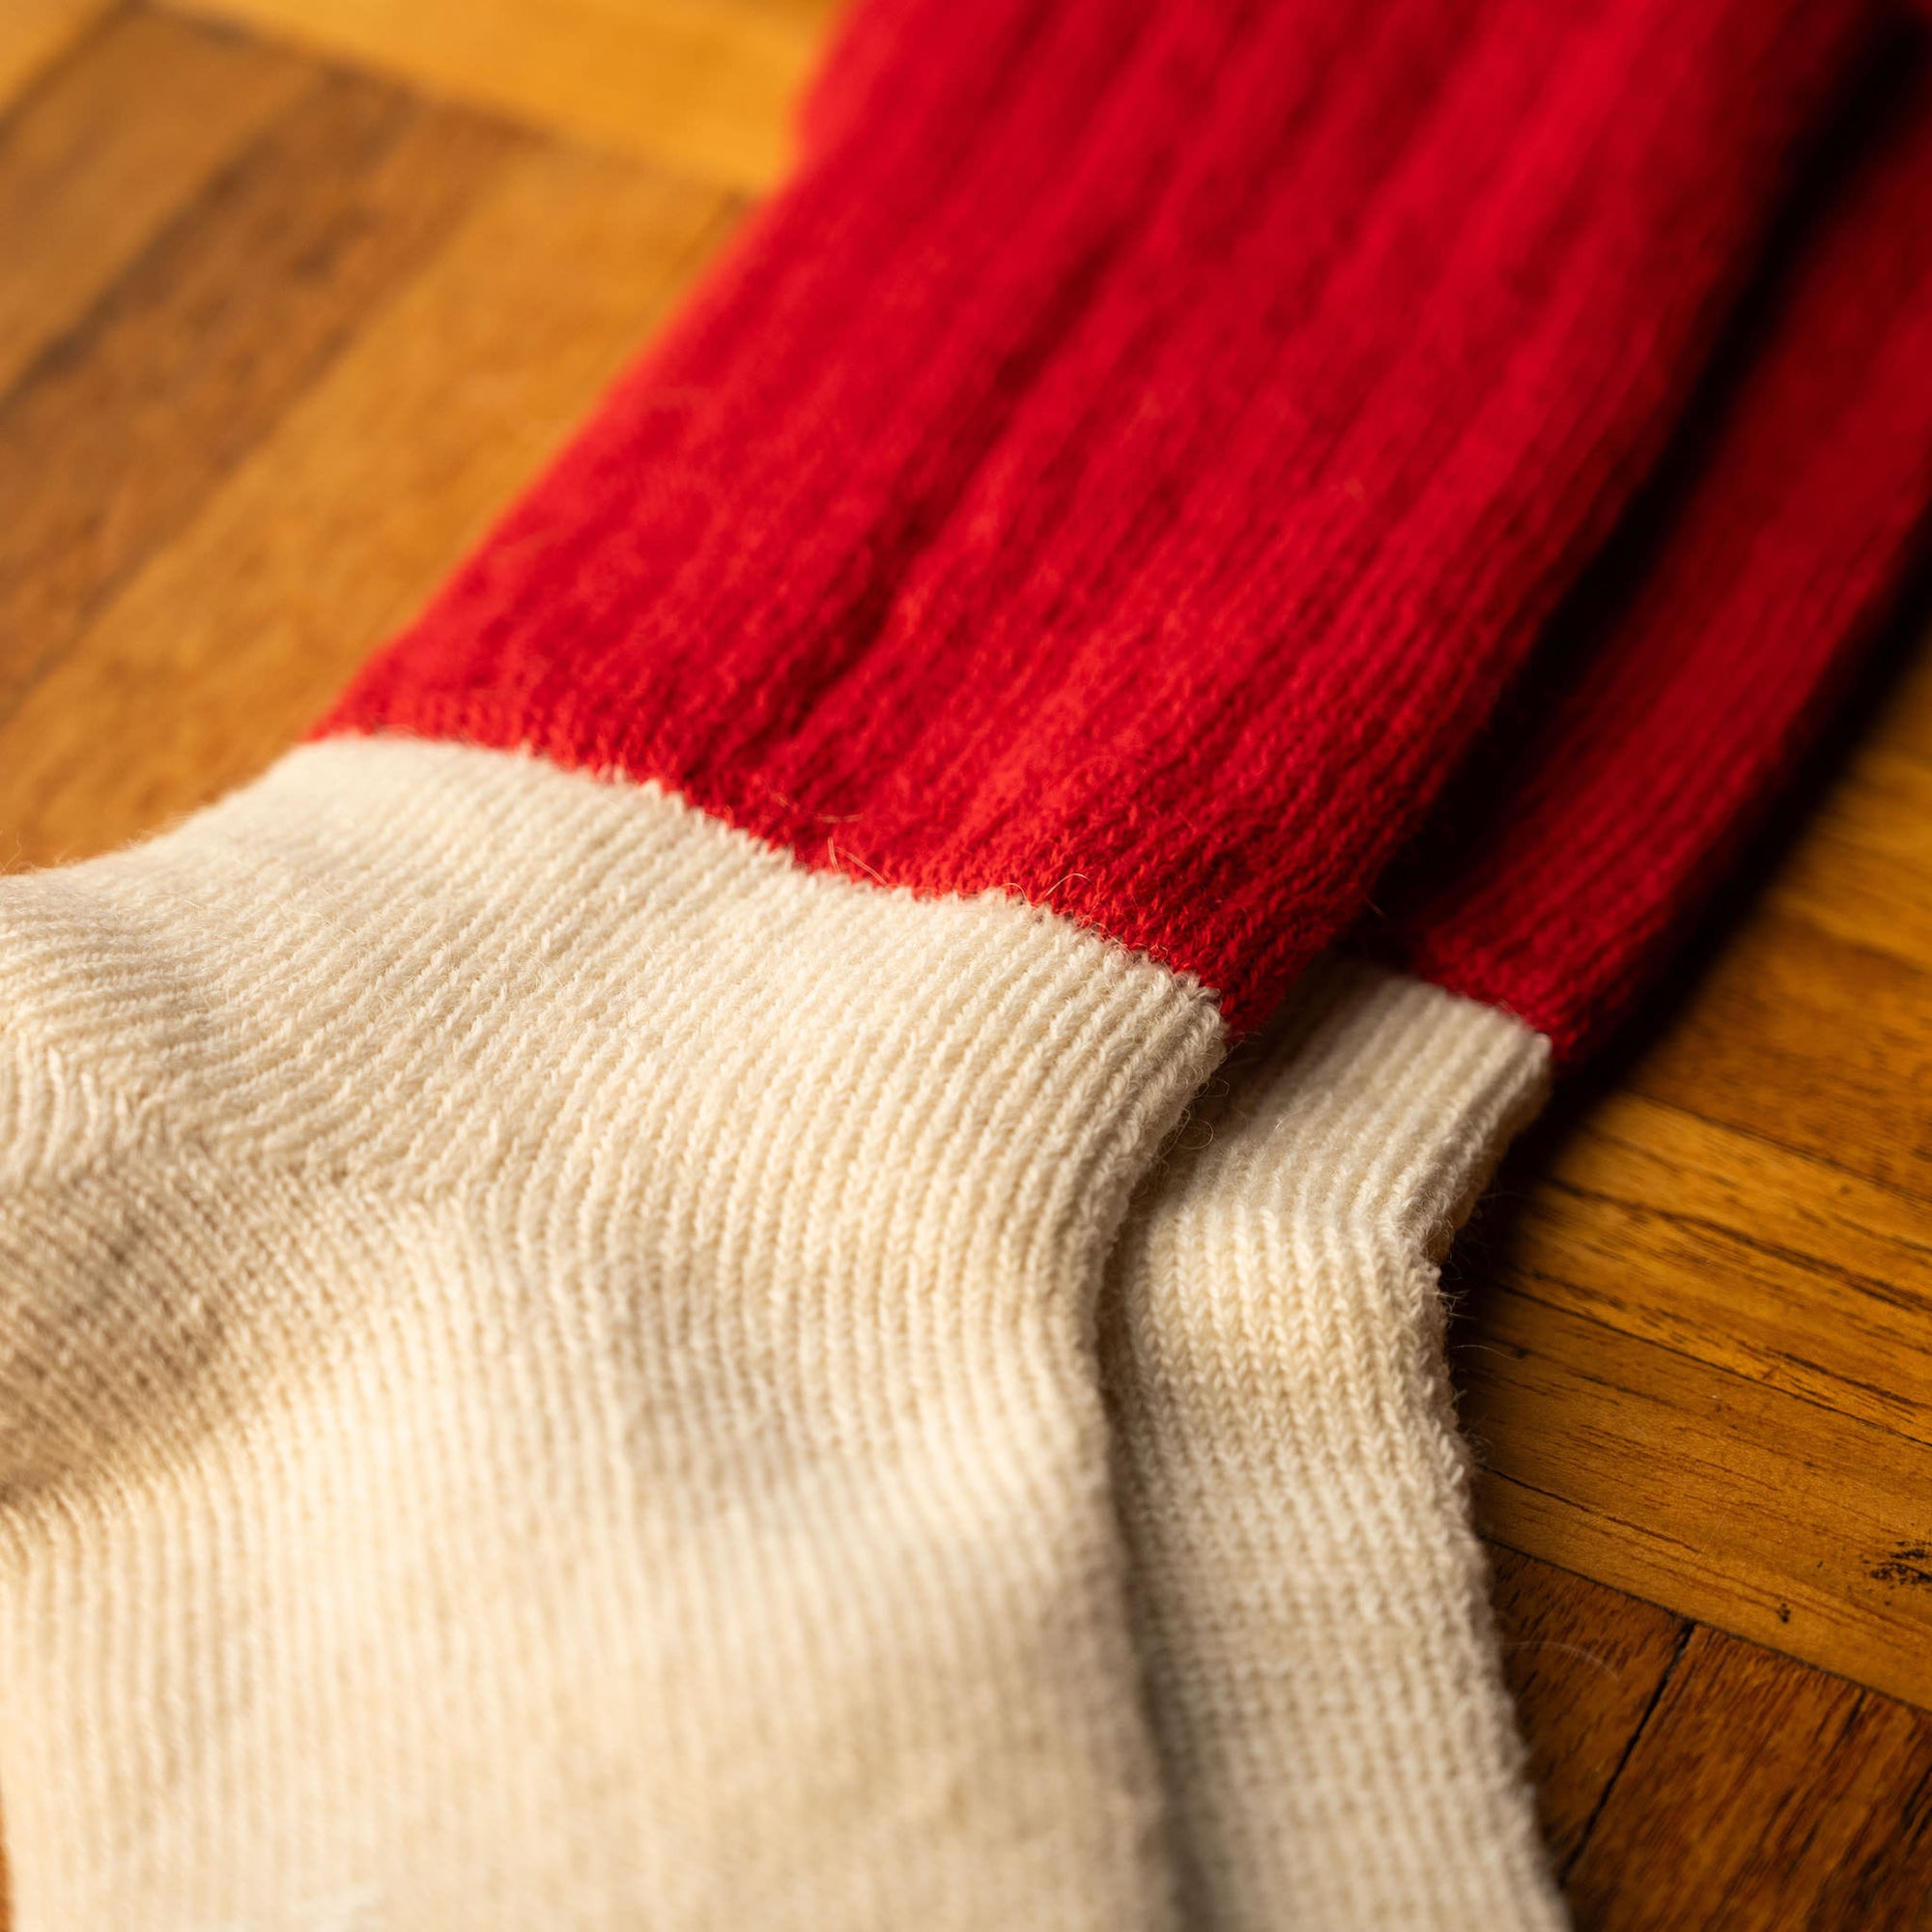 Colour & Yarn detail for Nishiguchi Kutsushita Red Mohair & Wool Socks